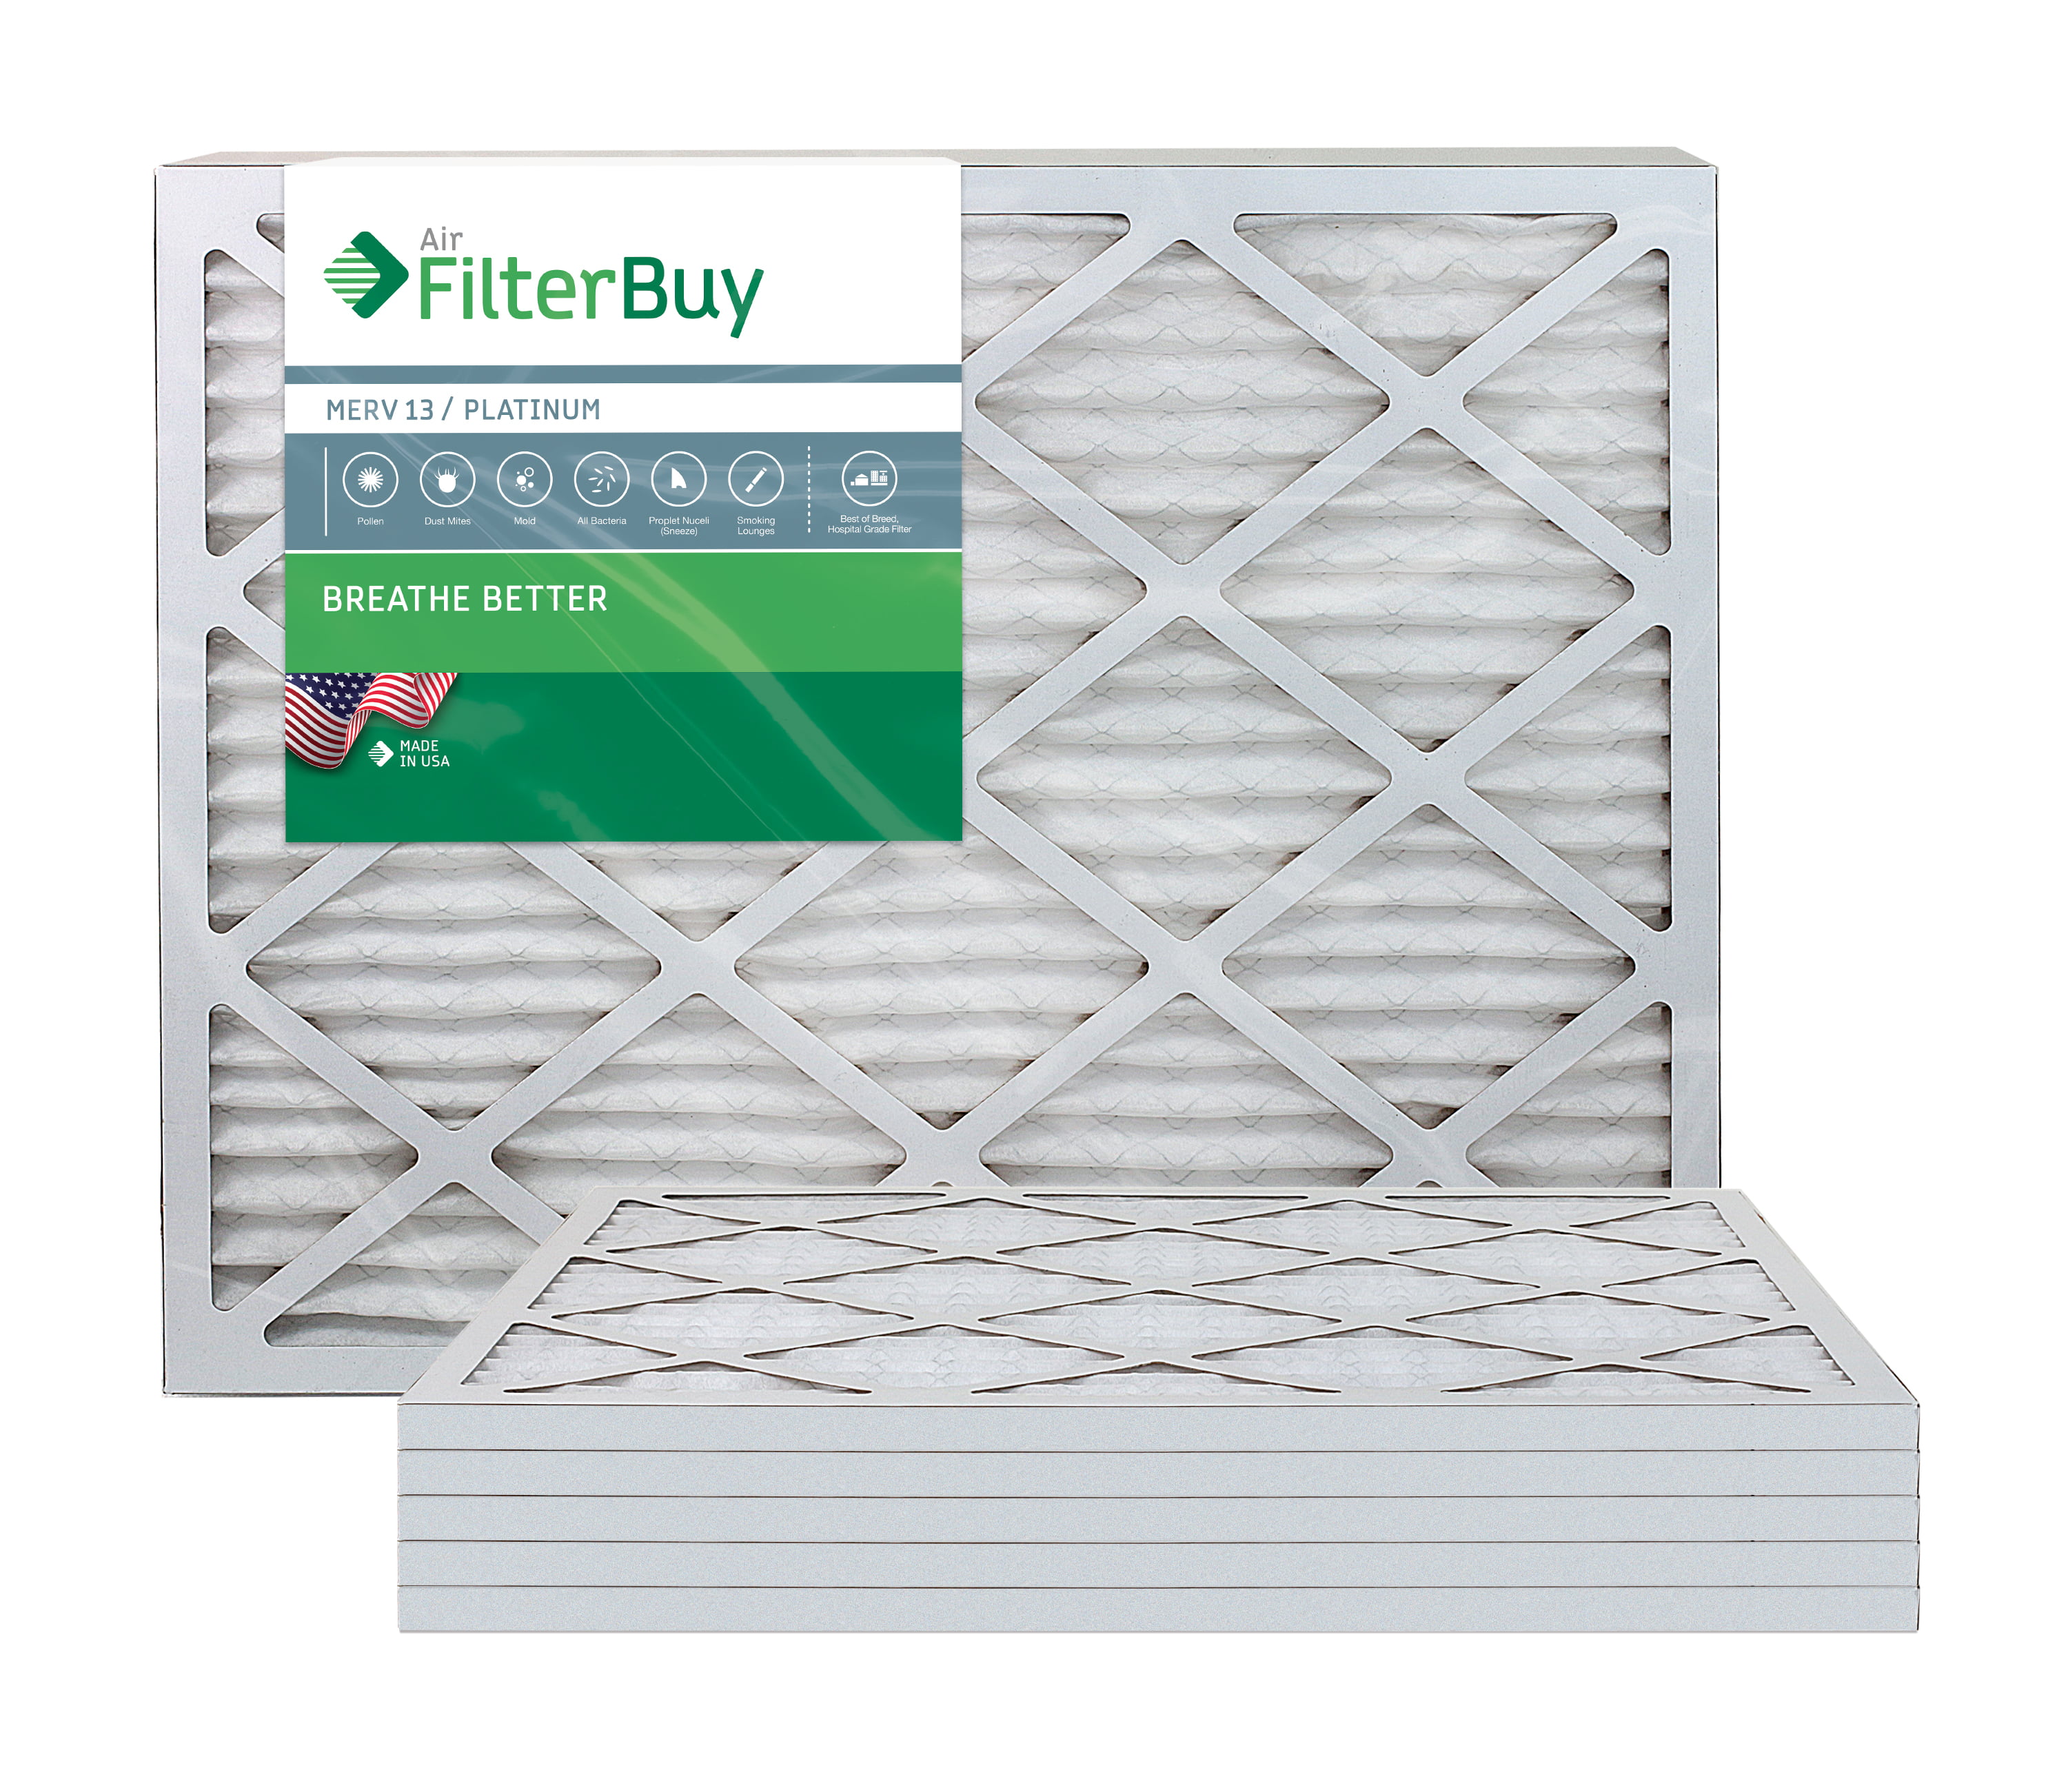 FilterBuy 16x20x4 MERV 13 Pleated AC Furnace Air Filter, Pack of 6 Filters Platinum 16x20x4 